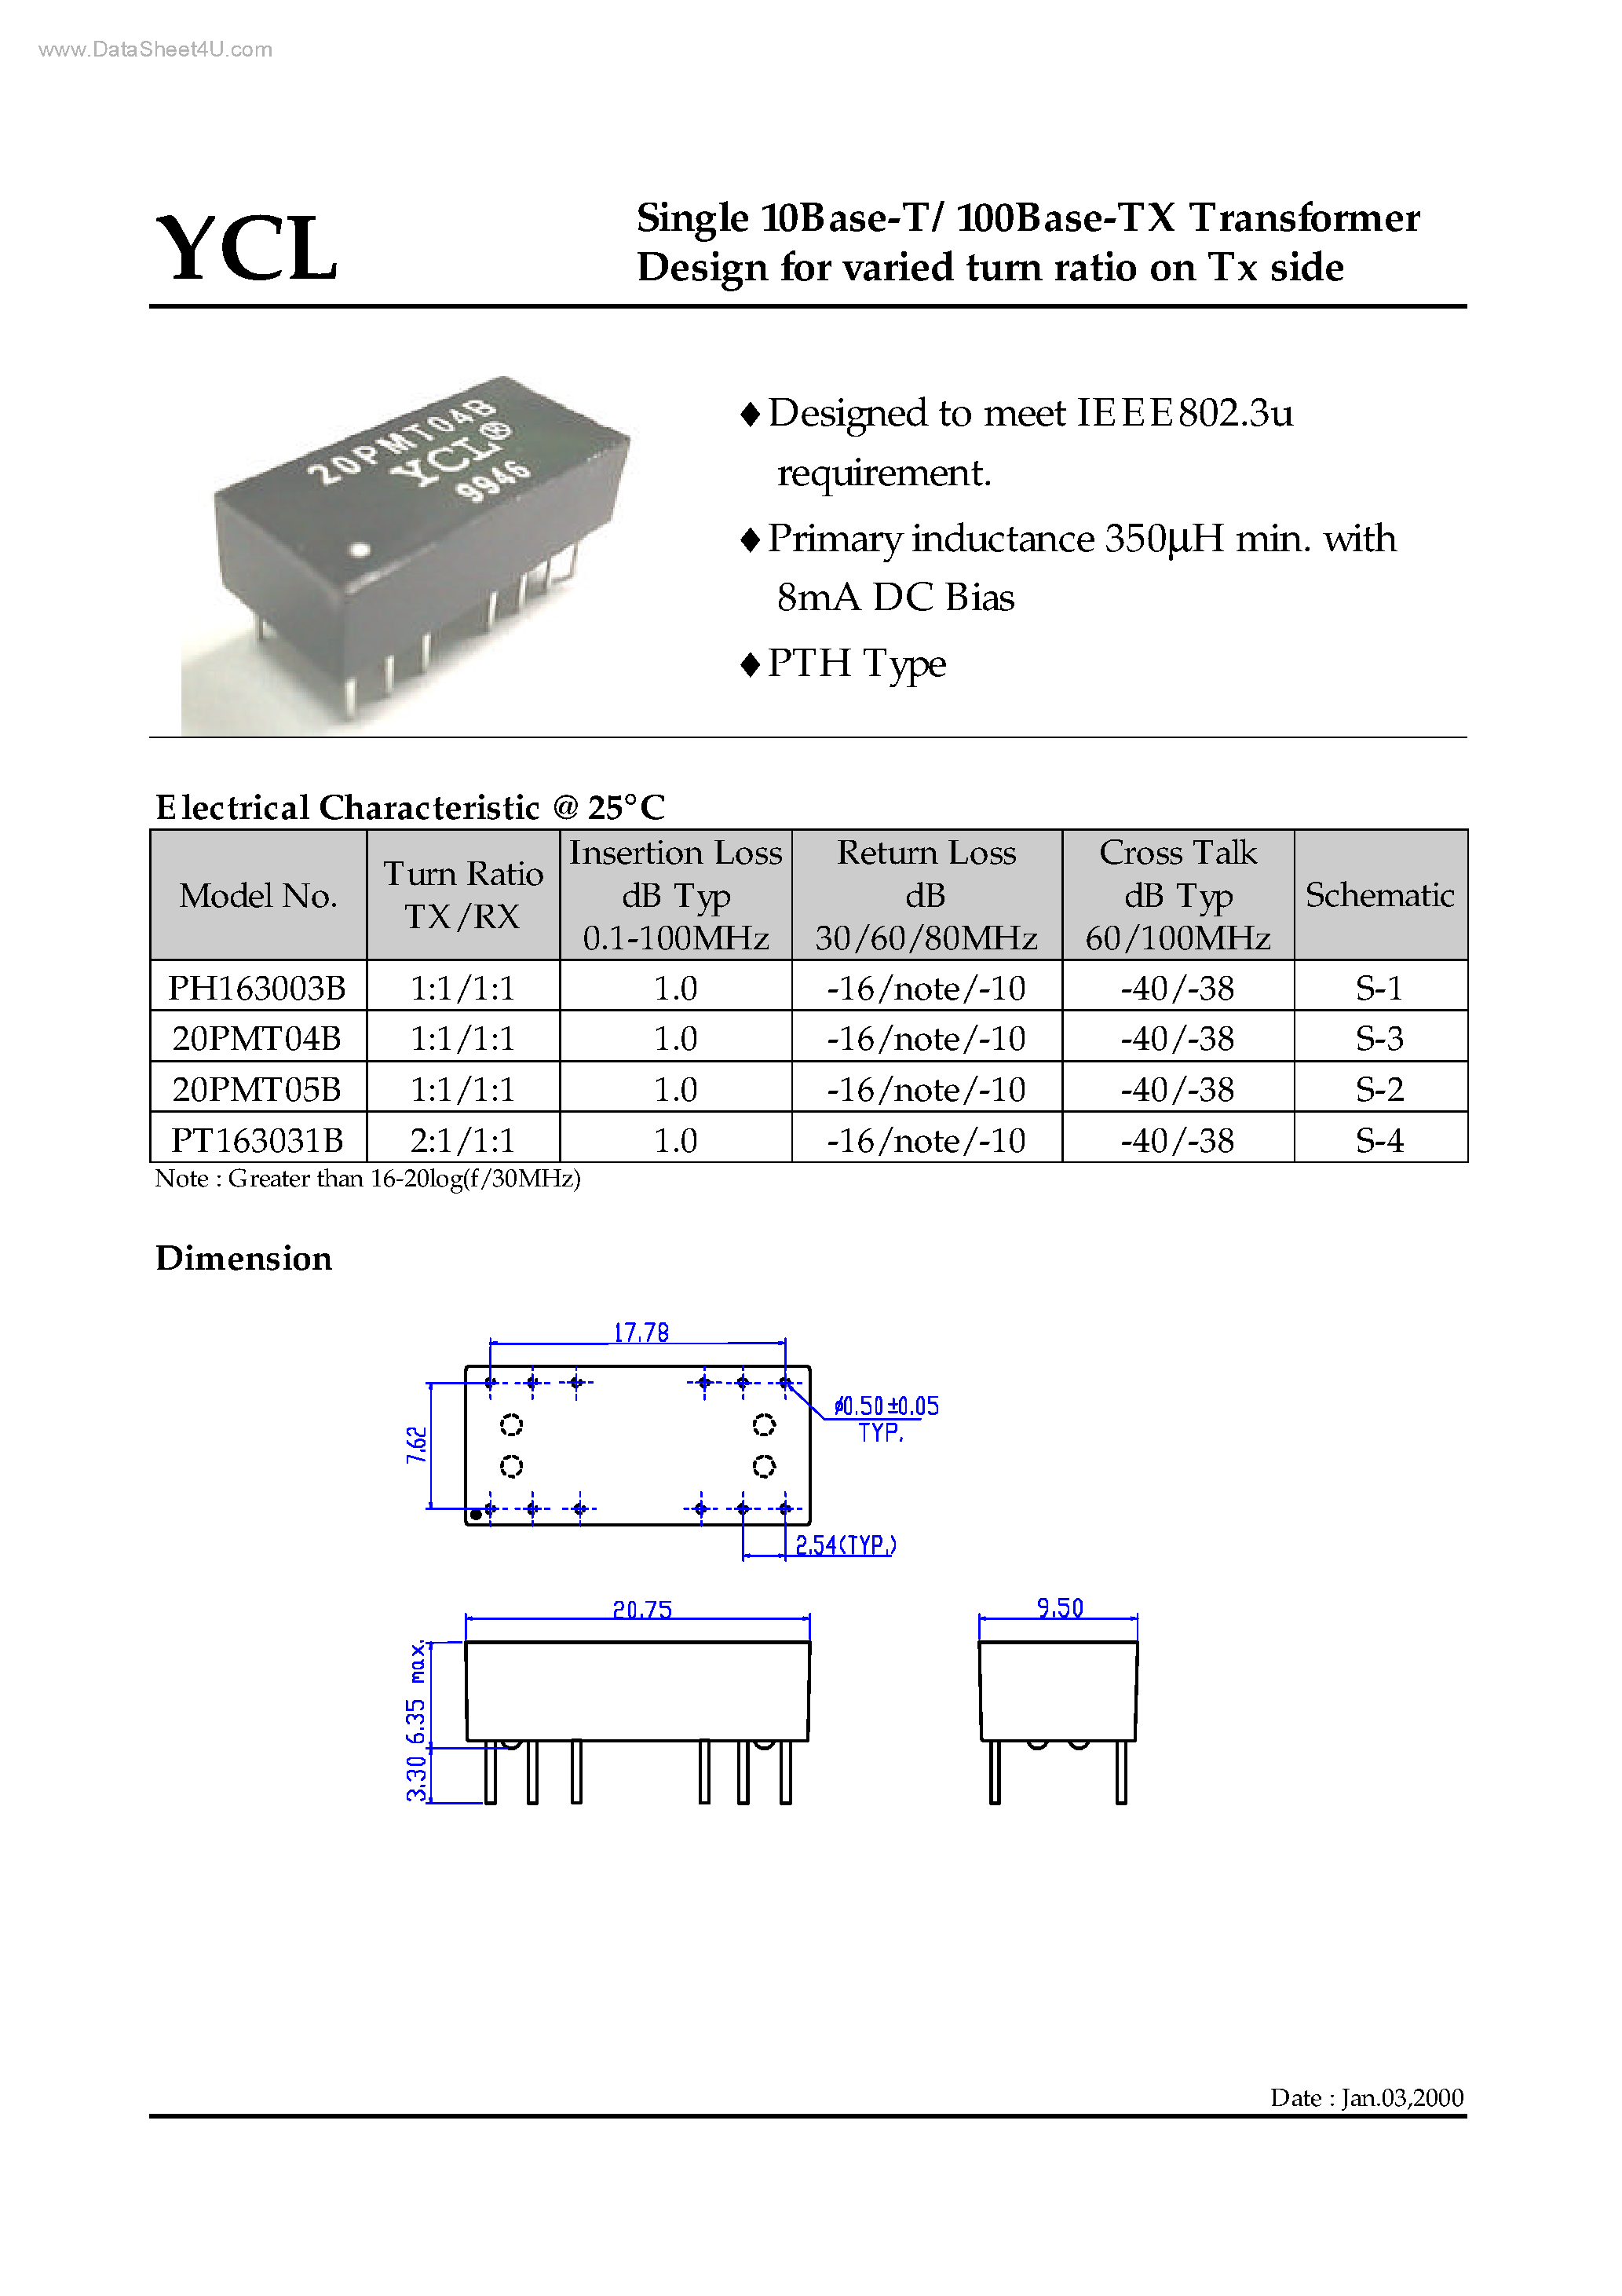 Даташит PH163003B - Single 10Base-T/100Base-TX Transformer Design страница 1